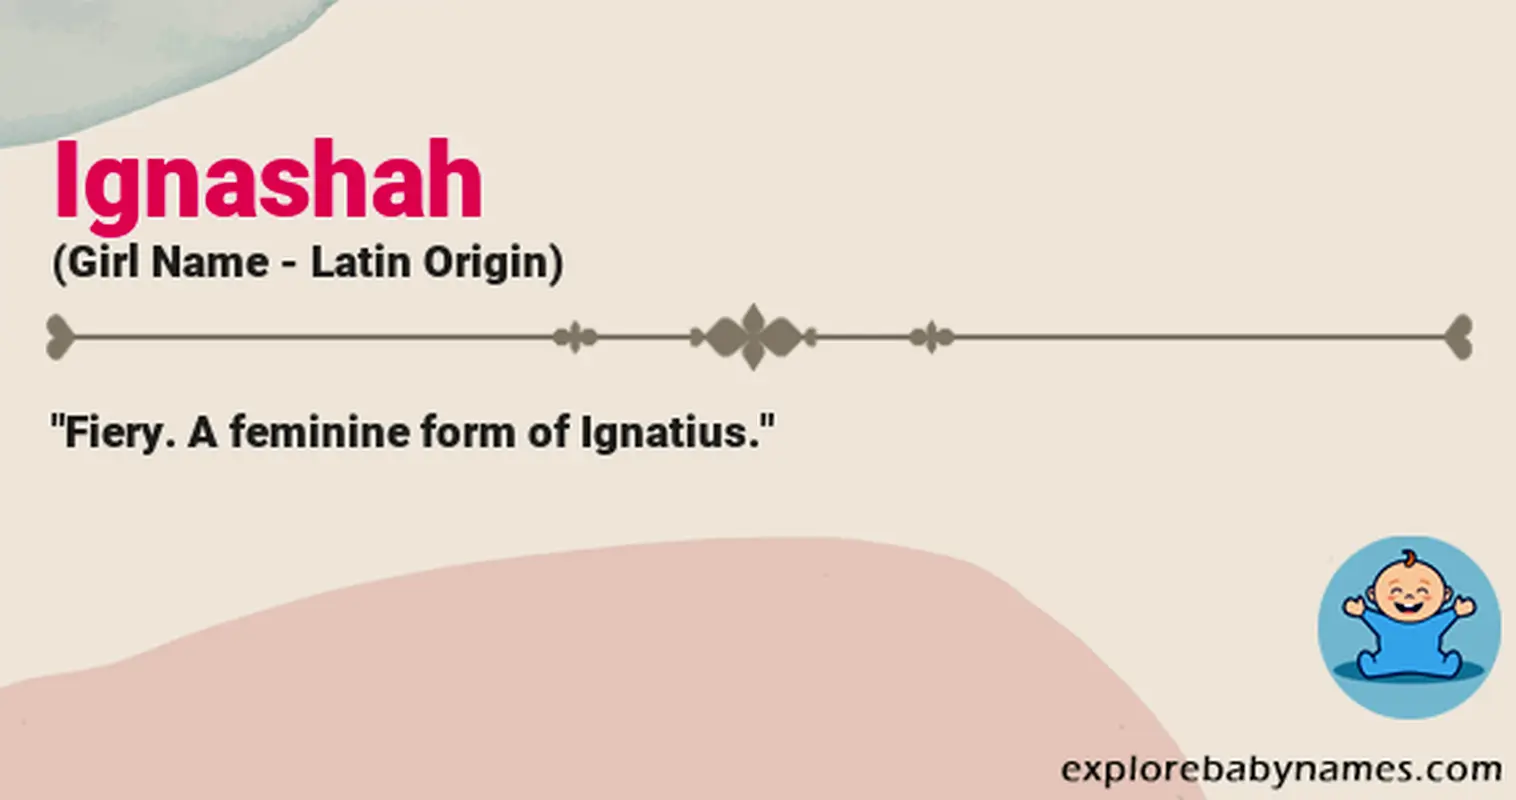 Meaning of Ignashah